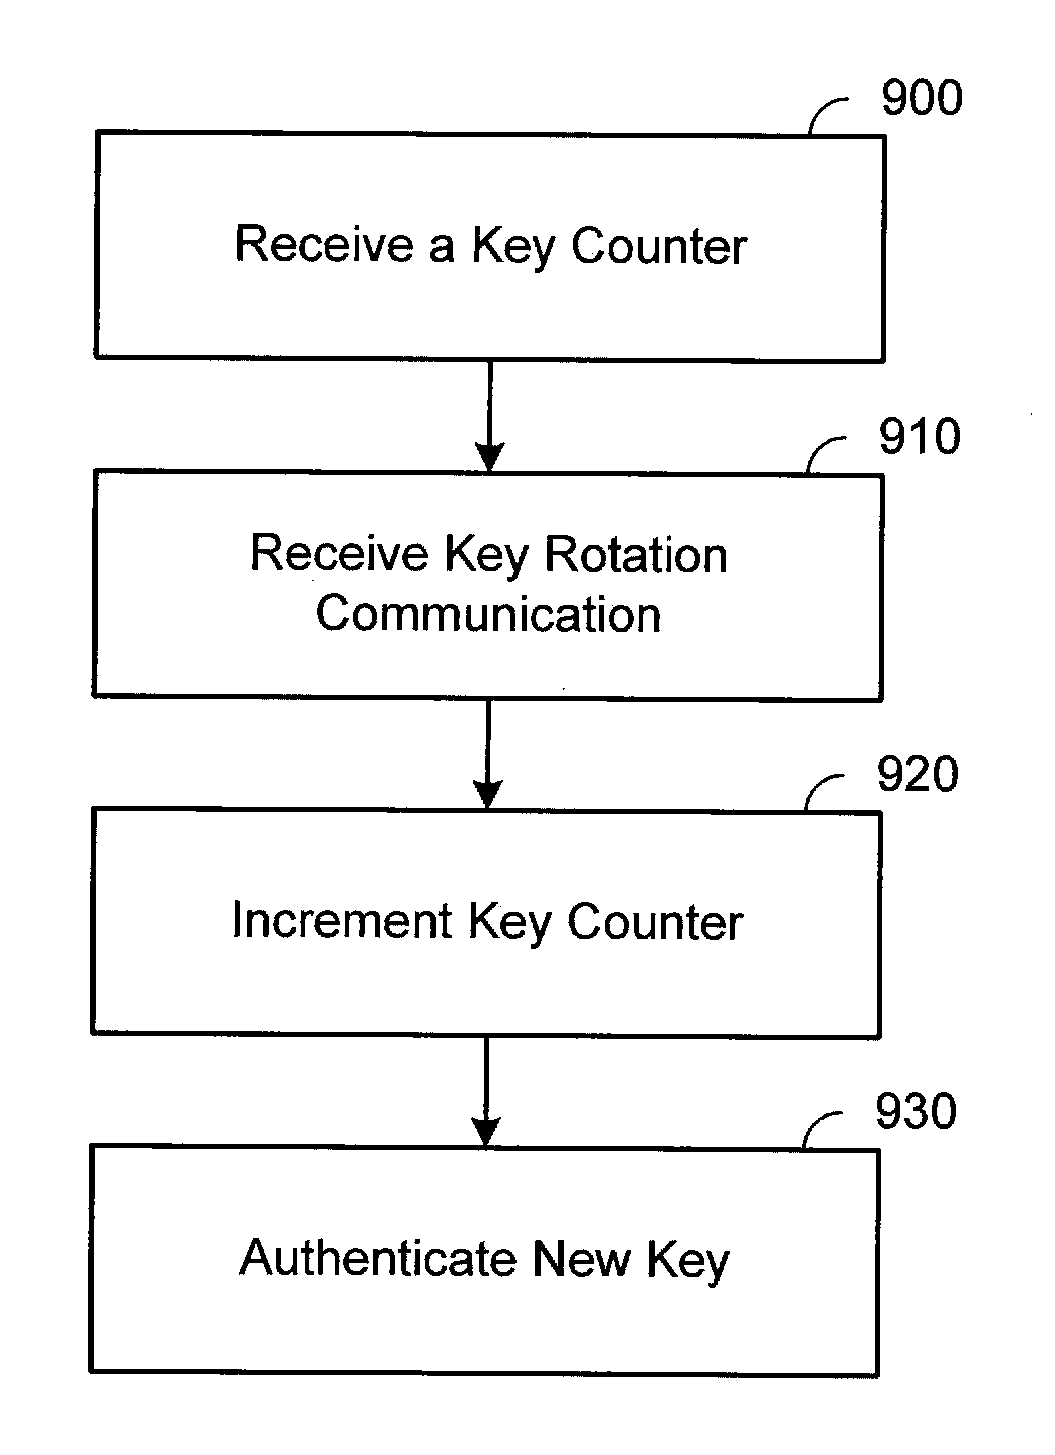 Network encryption key rotation